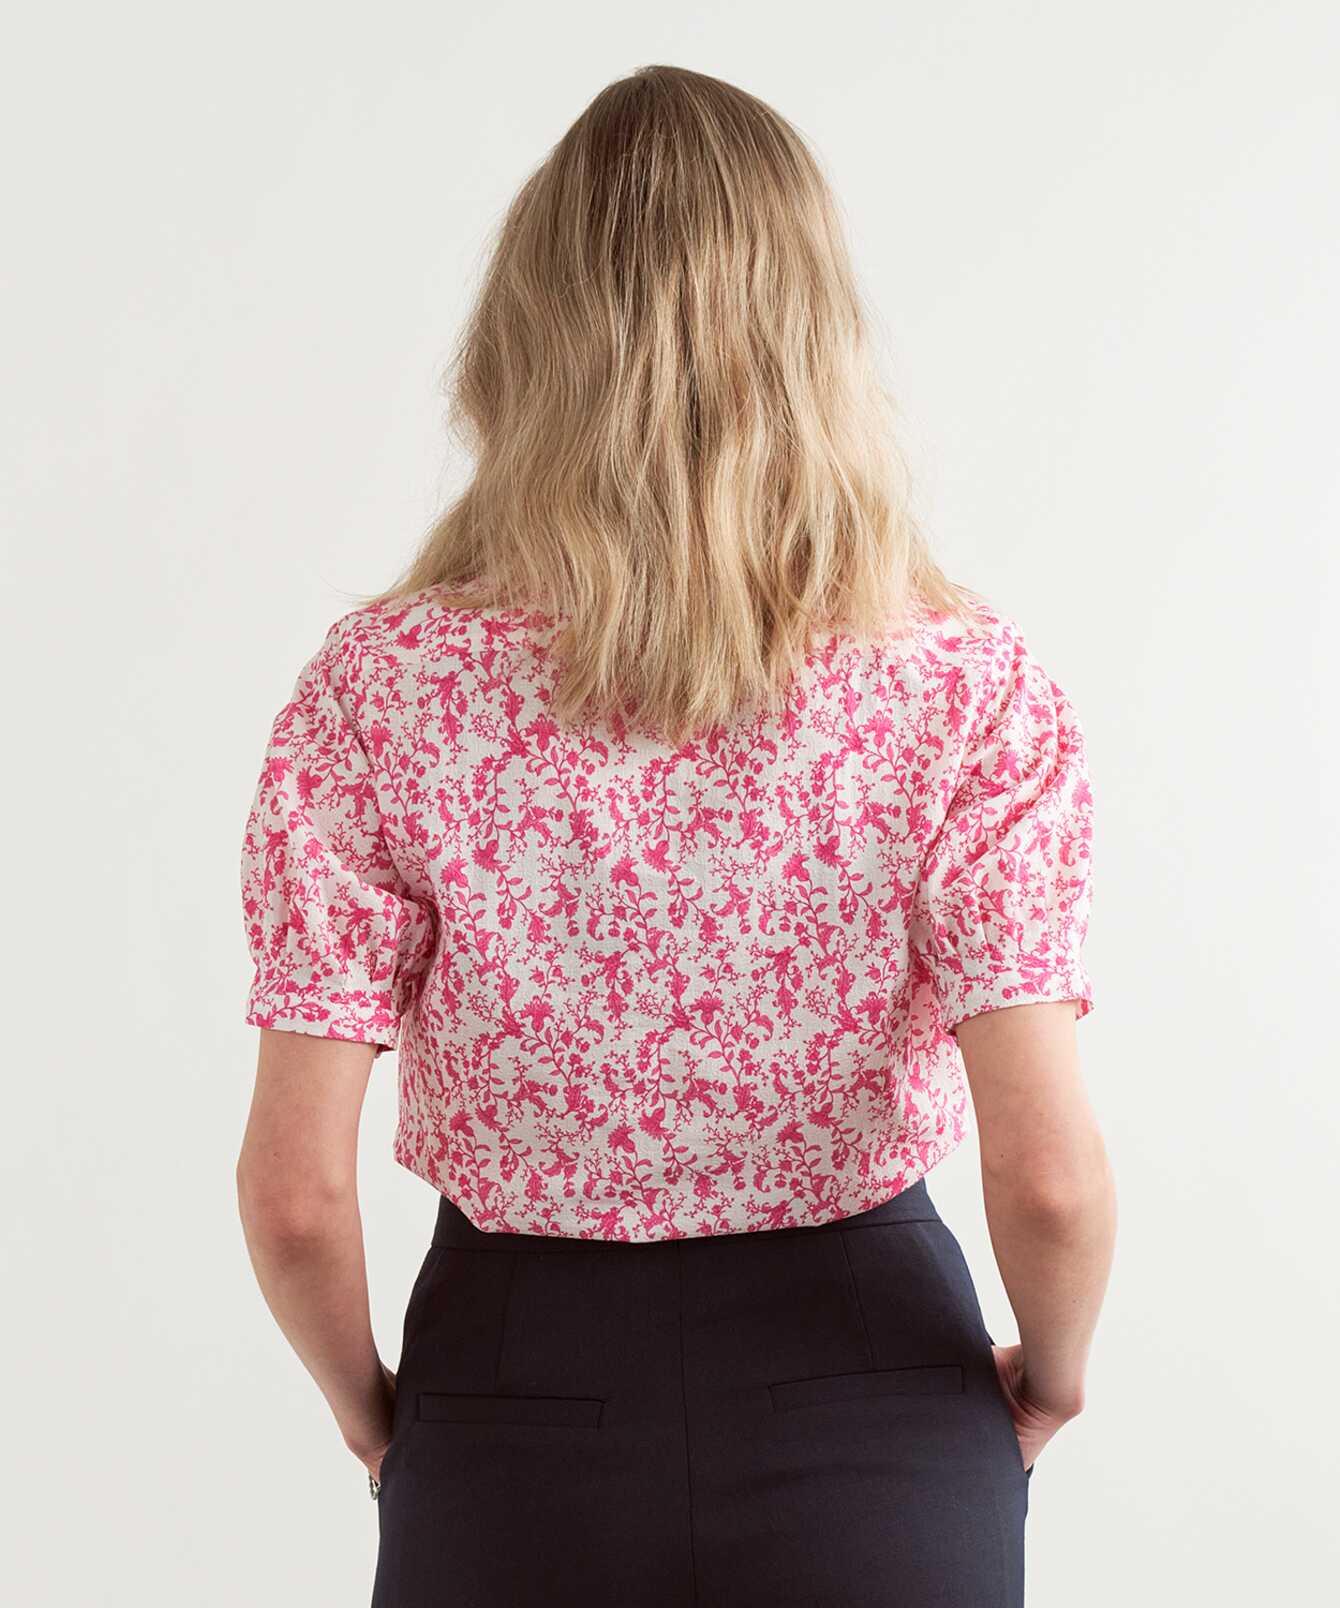 Shirt Harper Pink Floral Short Sleeve Jacquard Blouse The Shirt Factory